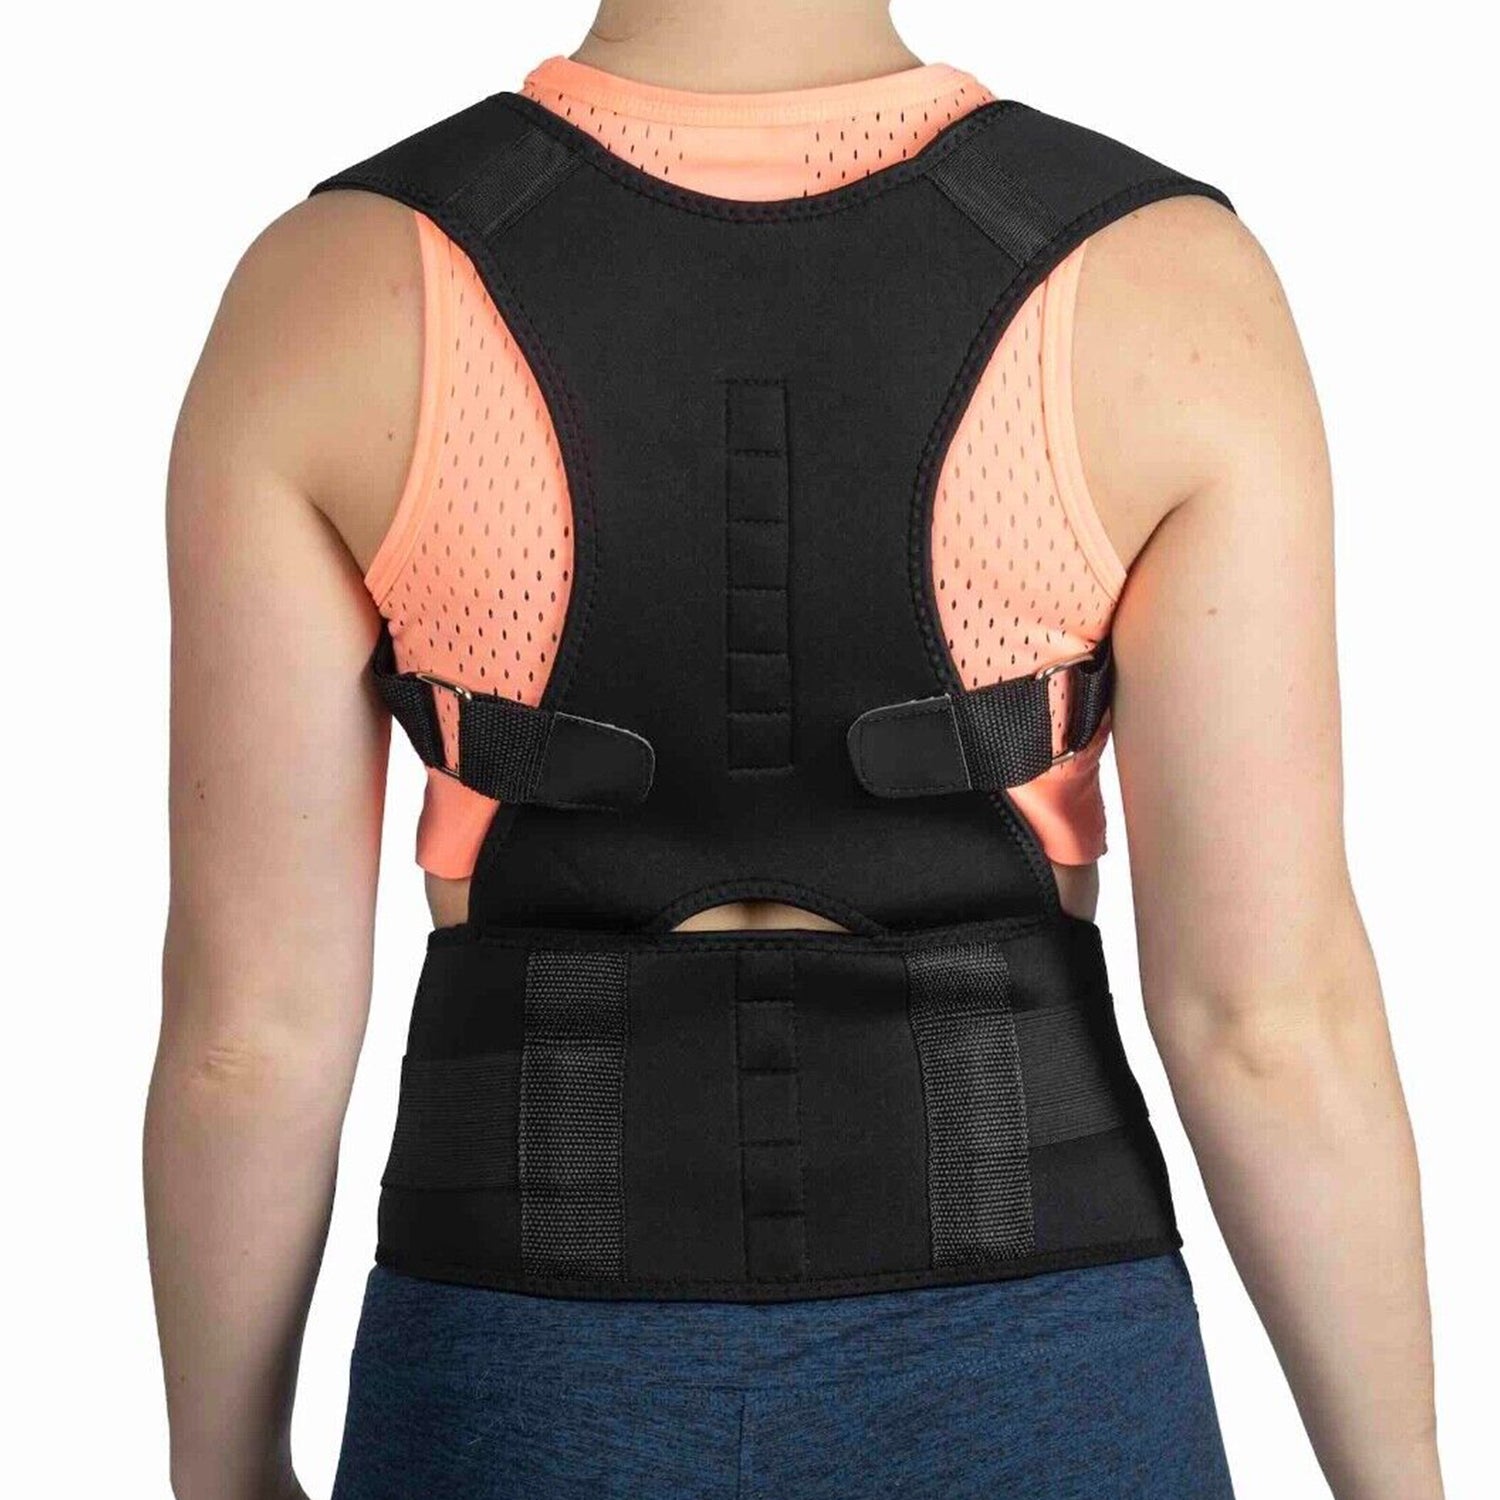 Skin Rope Handle silicone shoulder strap, For Posture Improvement